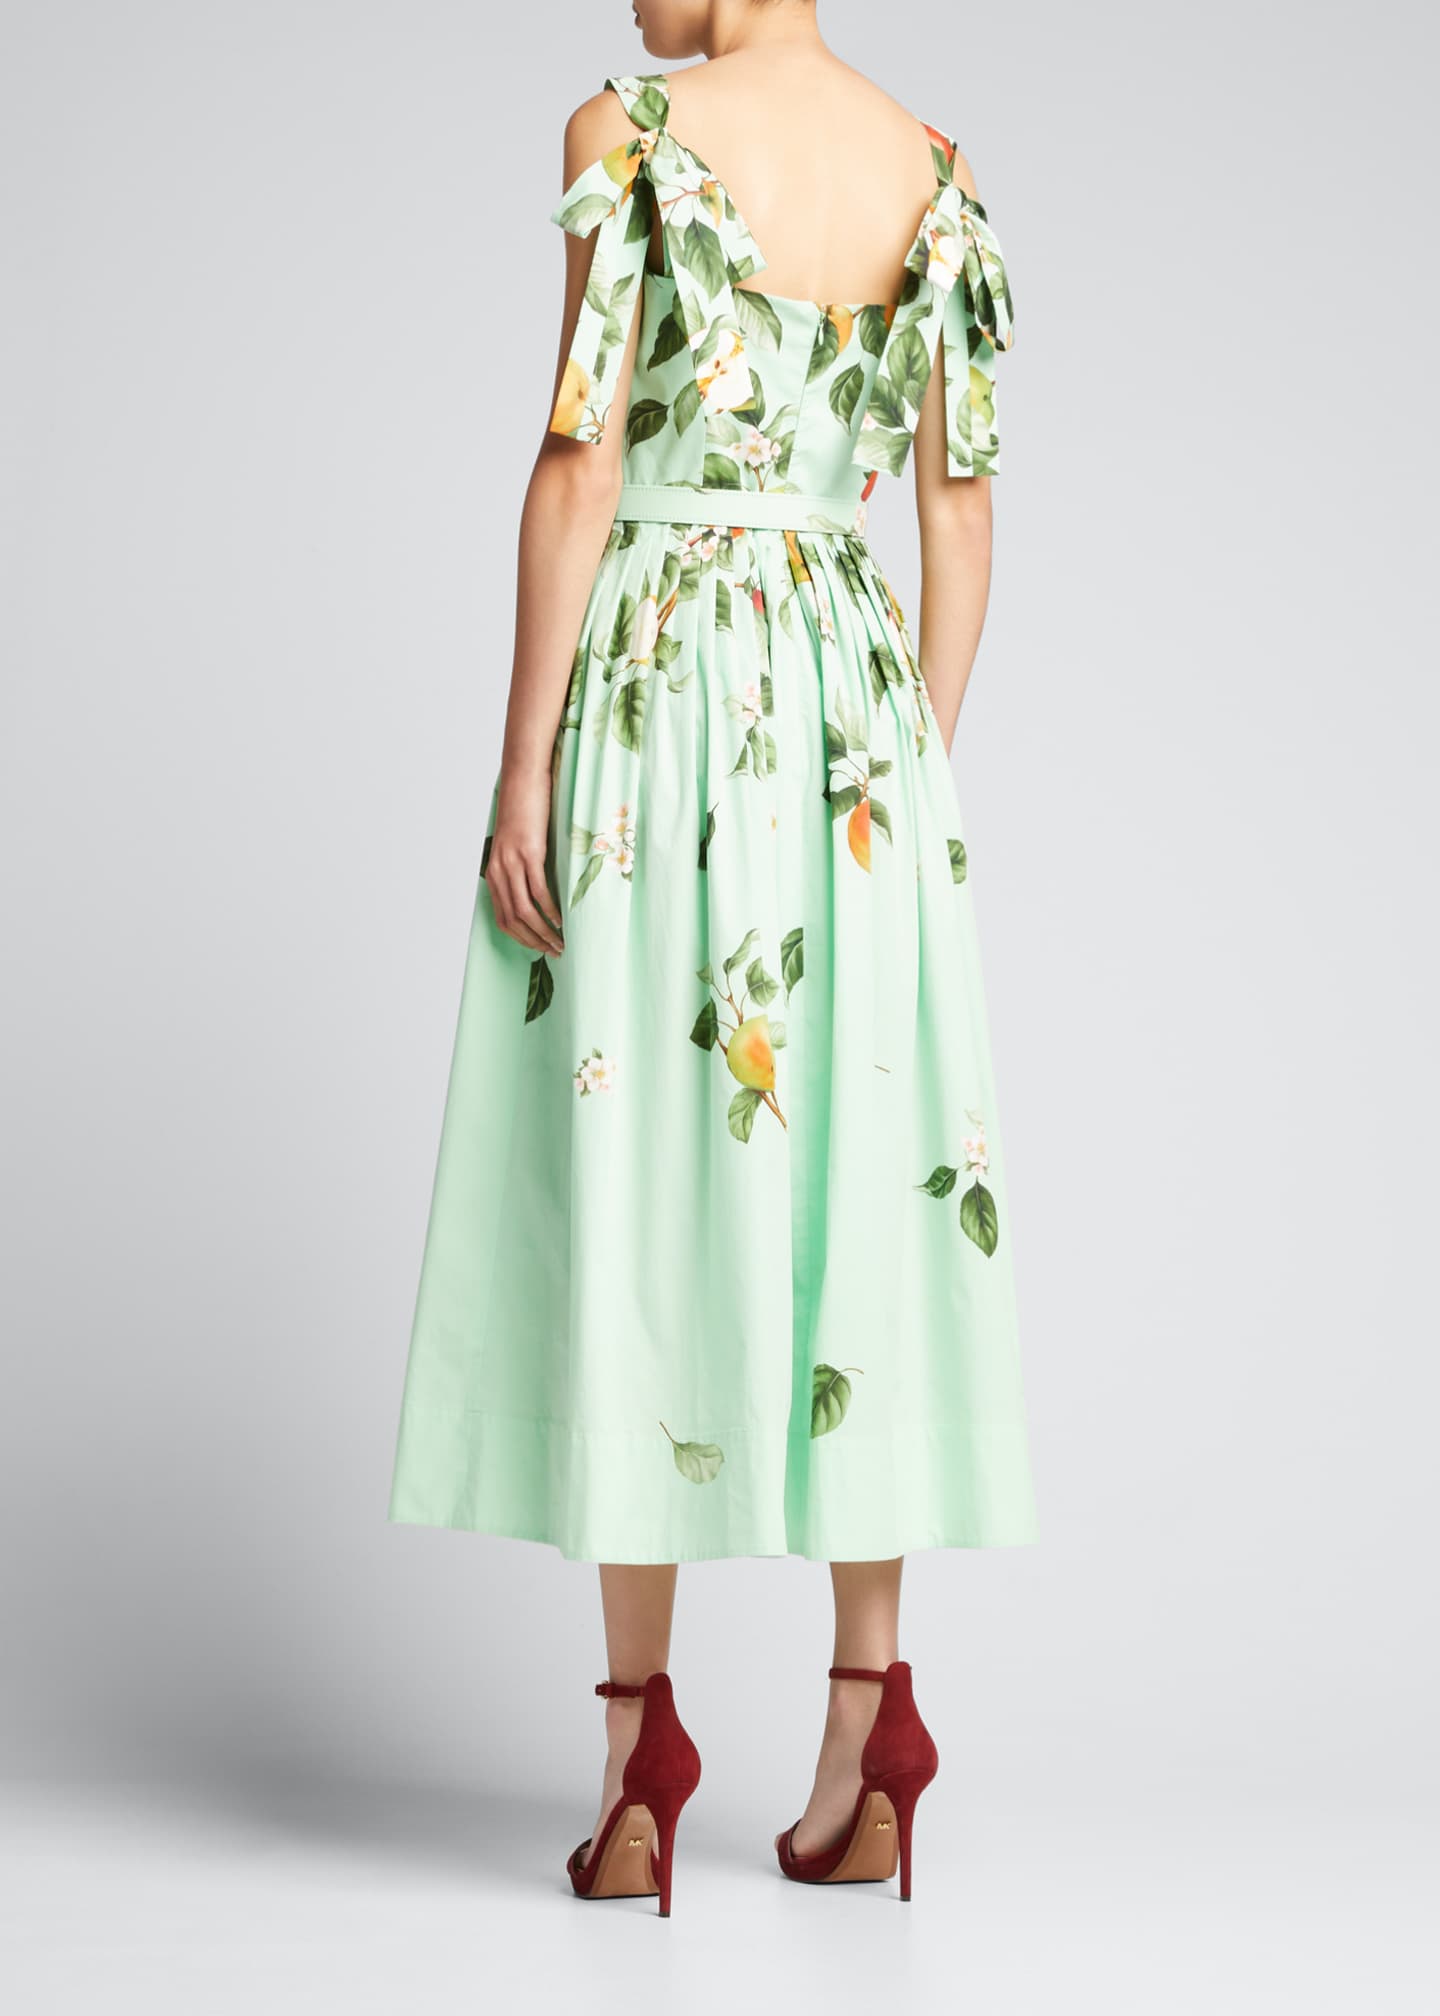 Oscar de la Renta Degrade Apple Blossom-Print Belted Tank Dress 